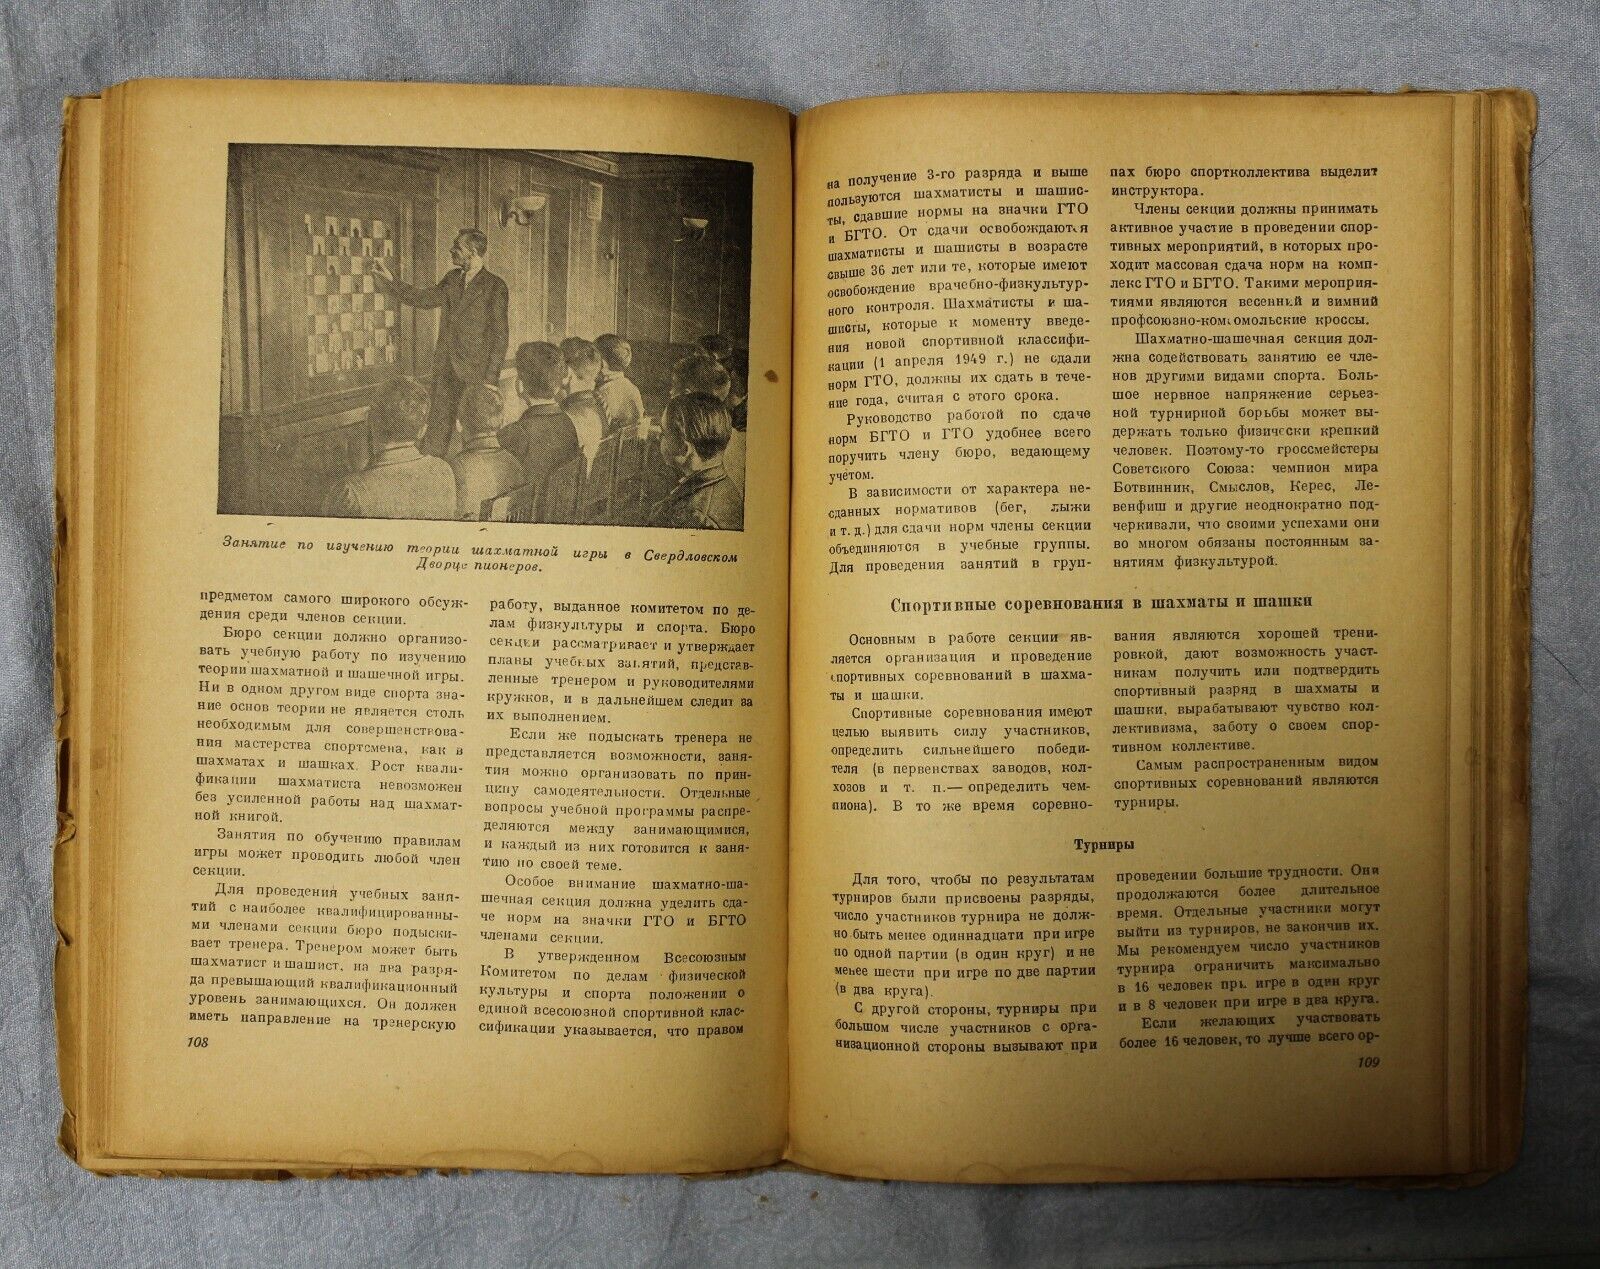 11132.Chess book: To Help Chess Player Zhuravleva Kavtorina Kiseleva Sverdlovsk 1951